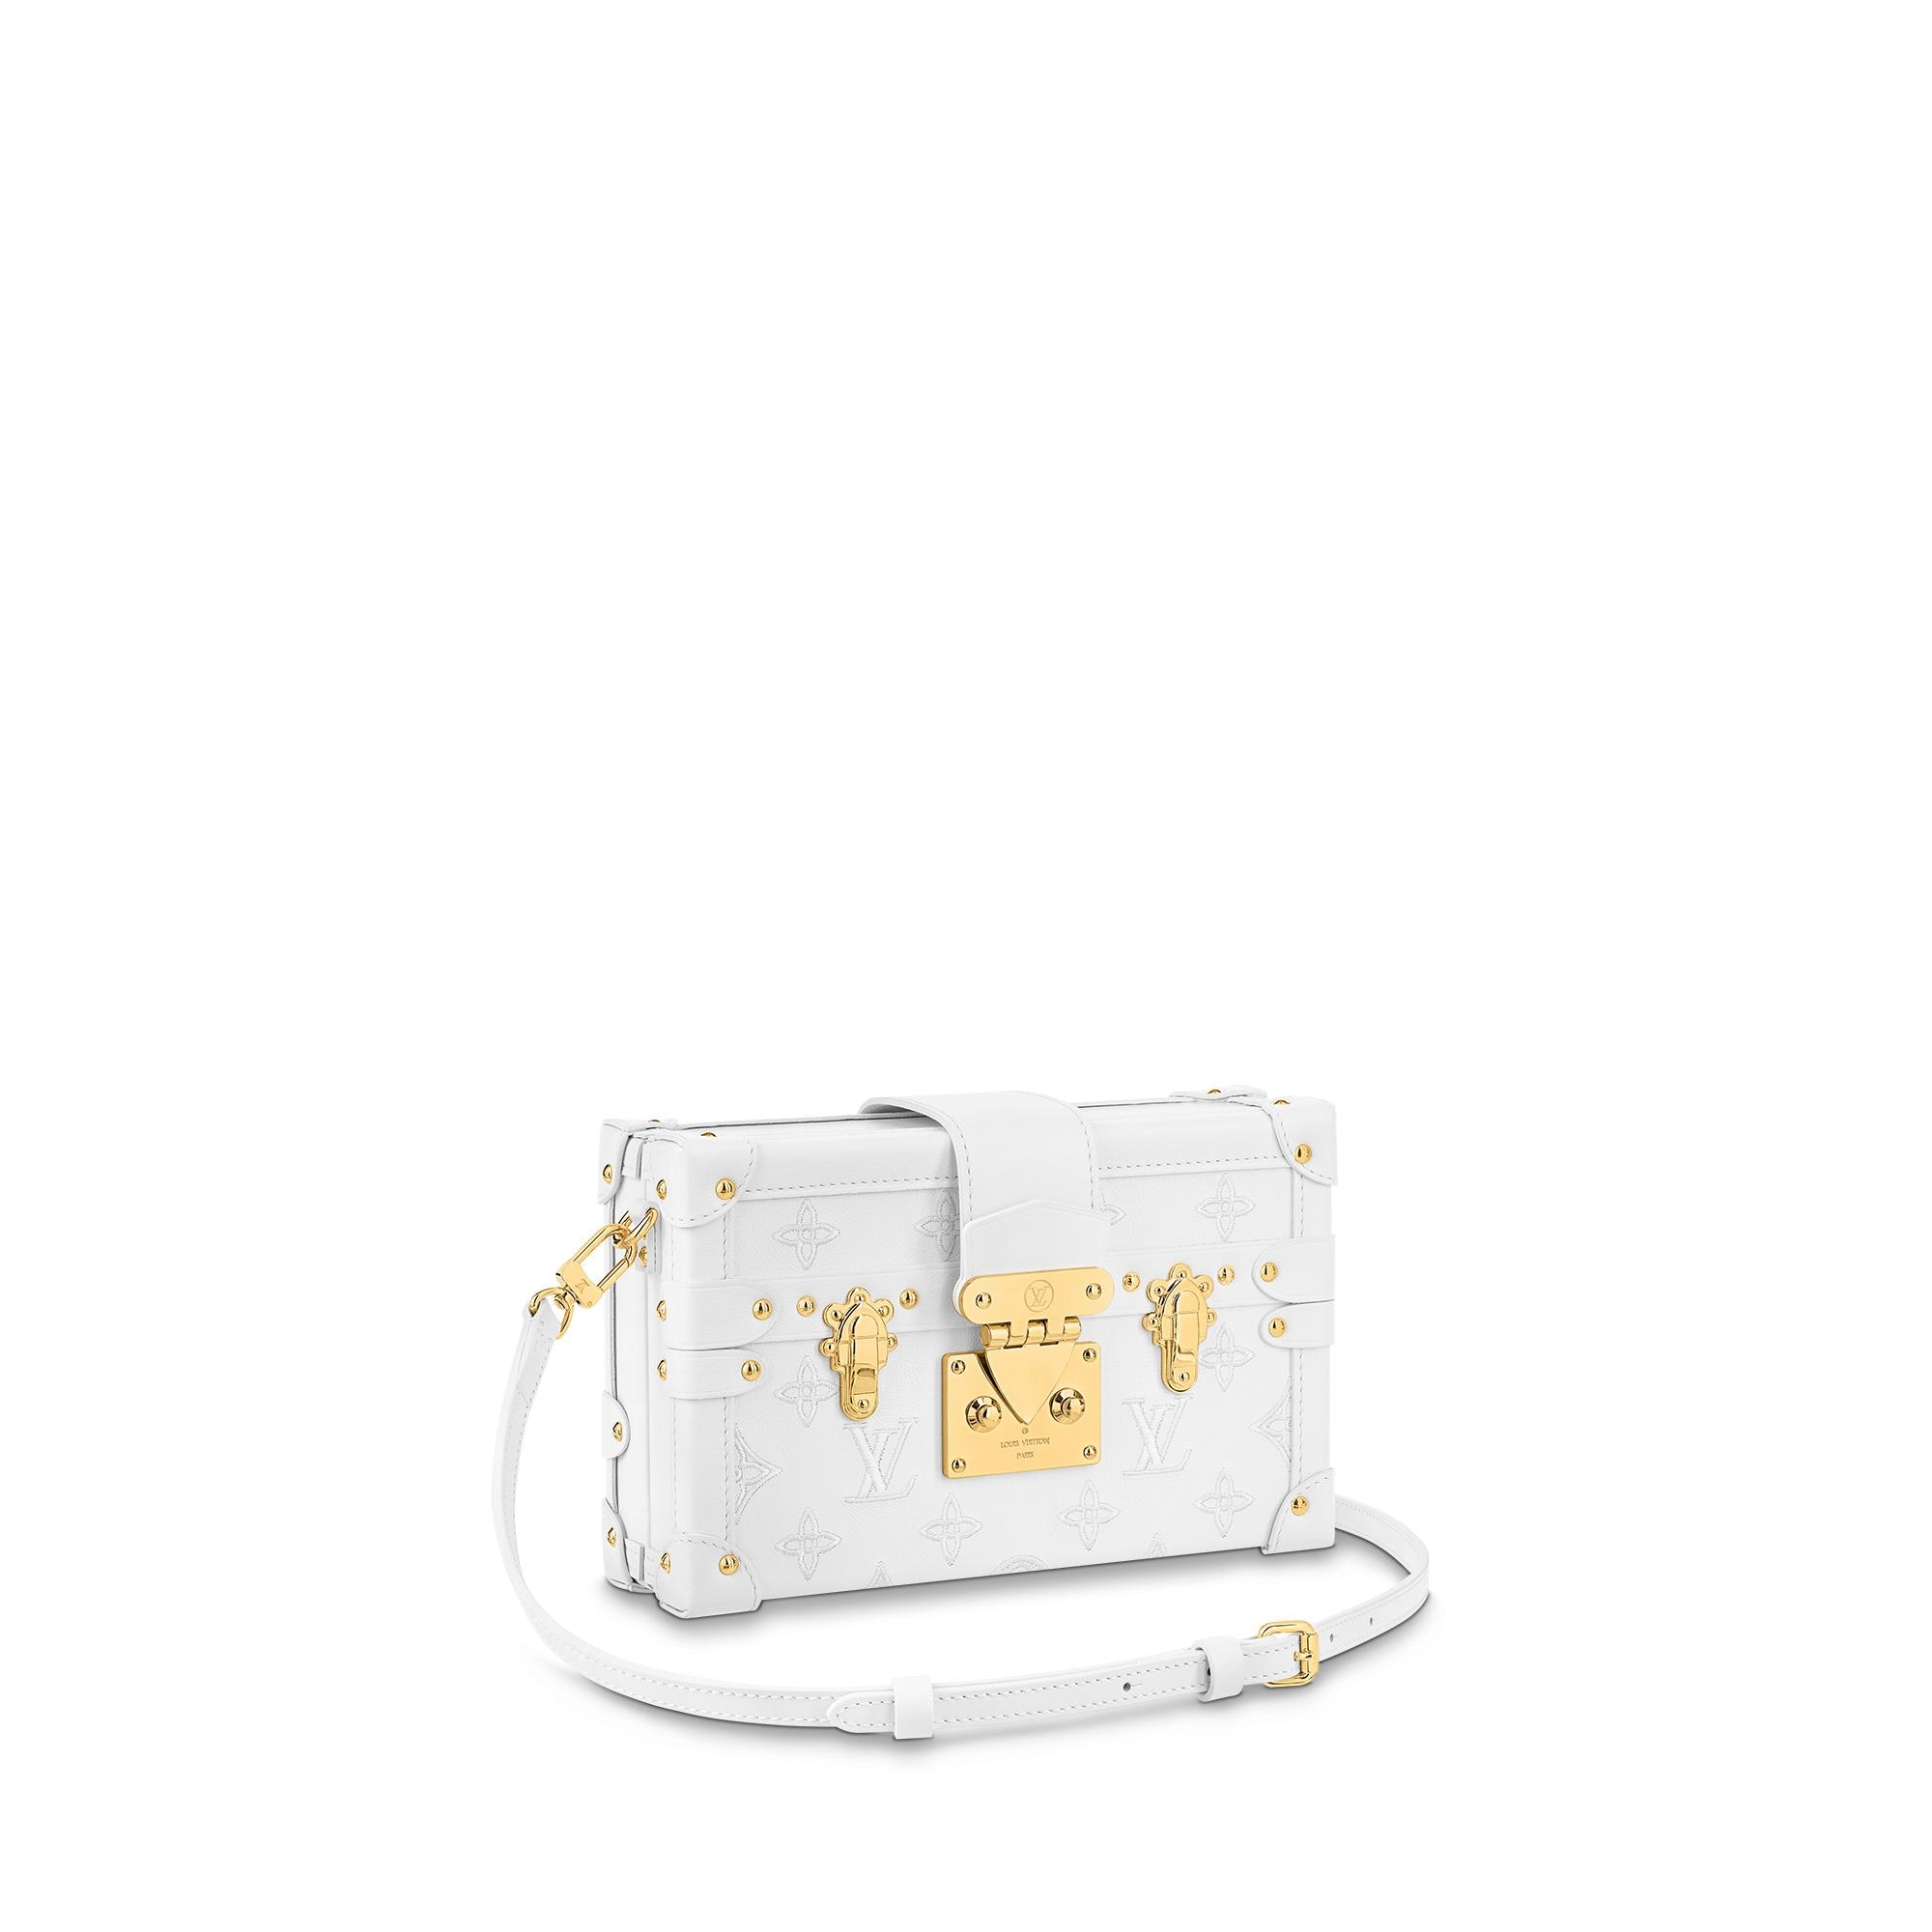 Louis Vuitton Petite Malle - Handbags M20847 White - $305.00